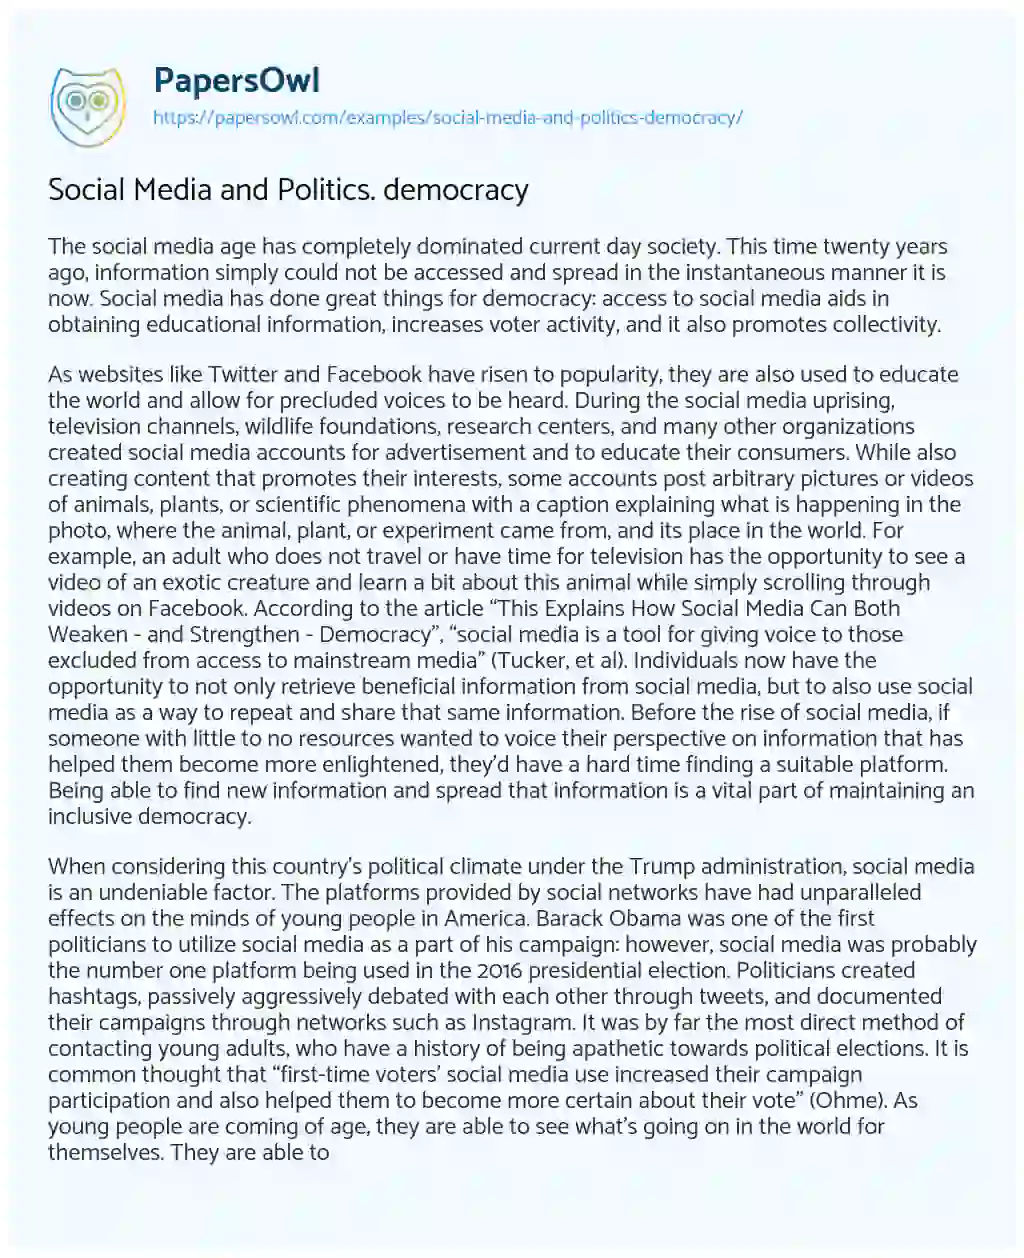 Essay on Social Media and Politics. Democracy